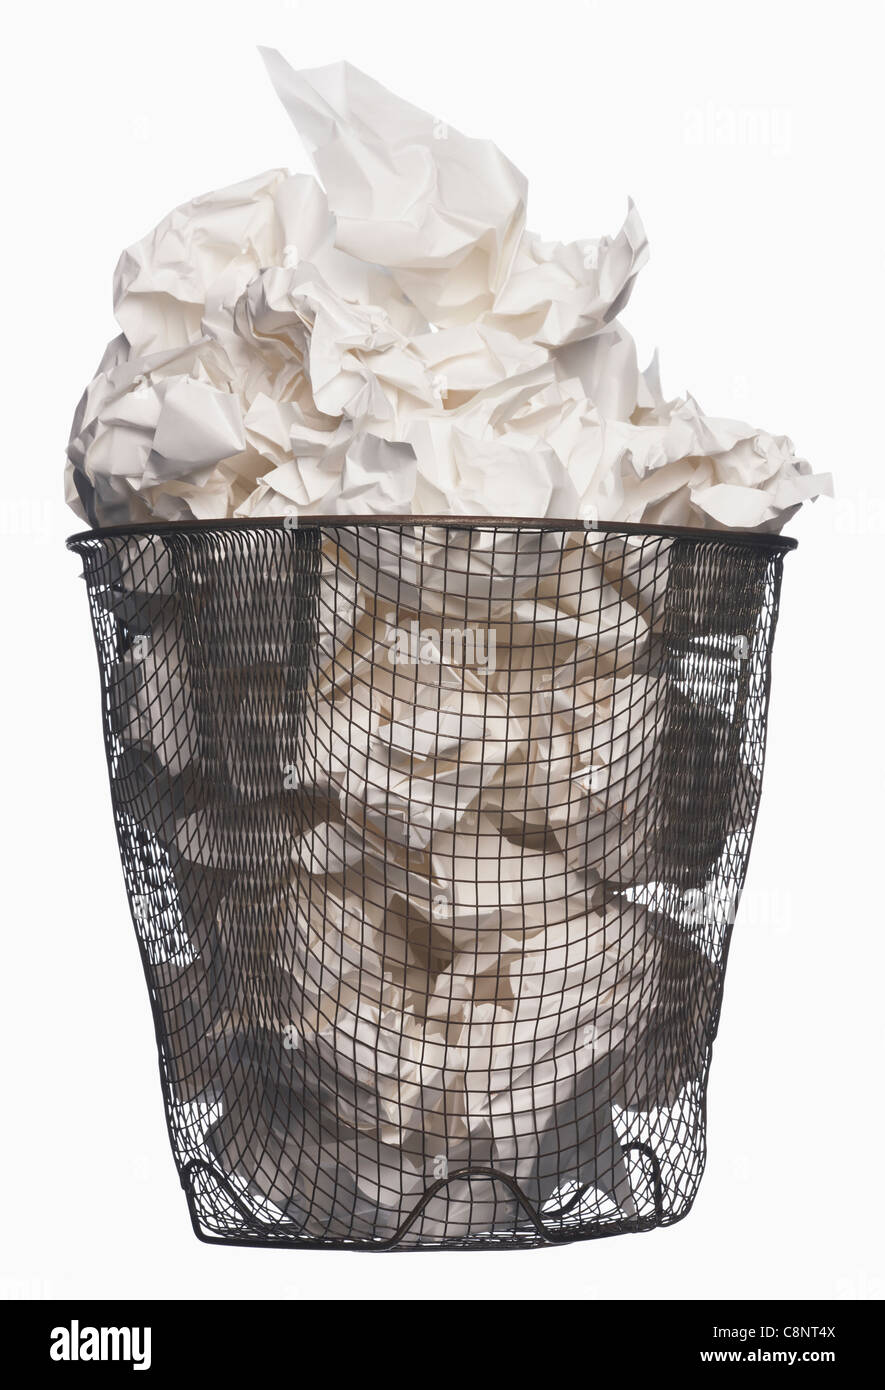 Wastepaper basket full of garbage Stock Photo